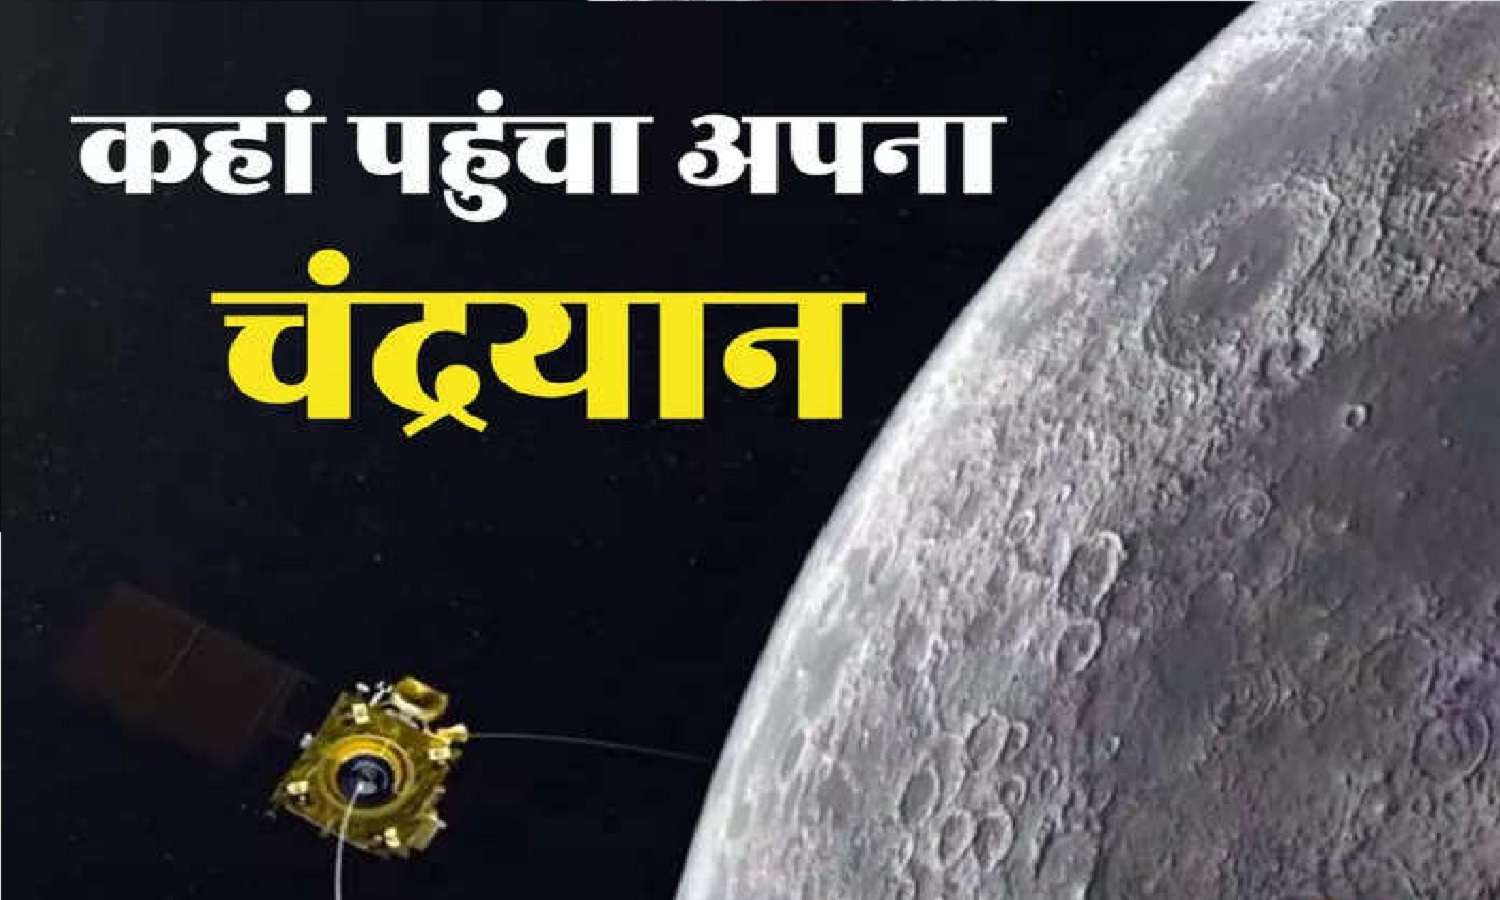 चांद से सिर्फ 25 Km दूर हमारा Chandrayaan-3! 23 अगस्त को होगी Soft Landing